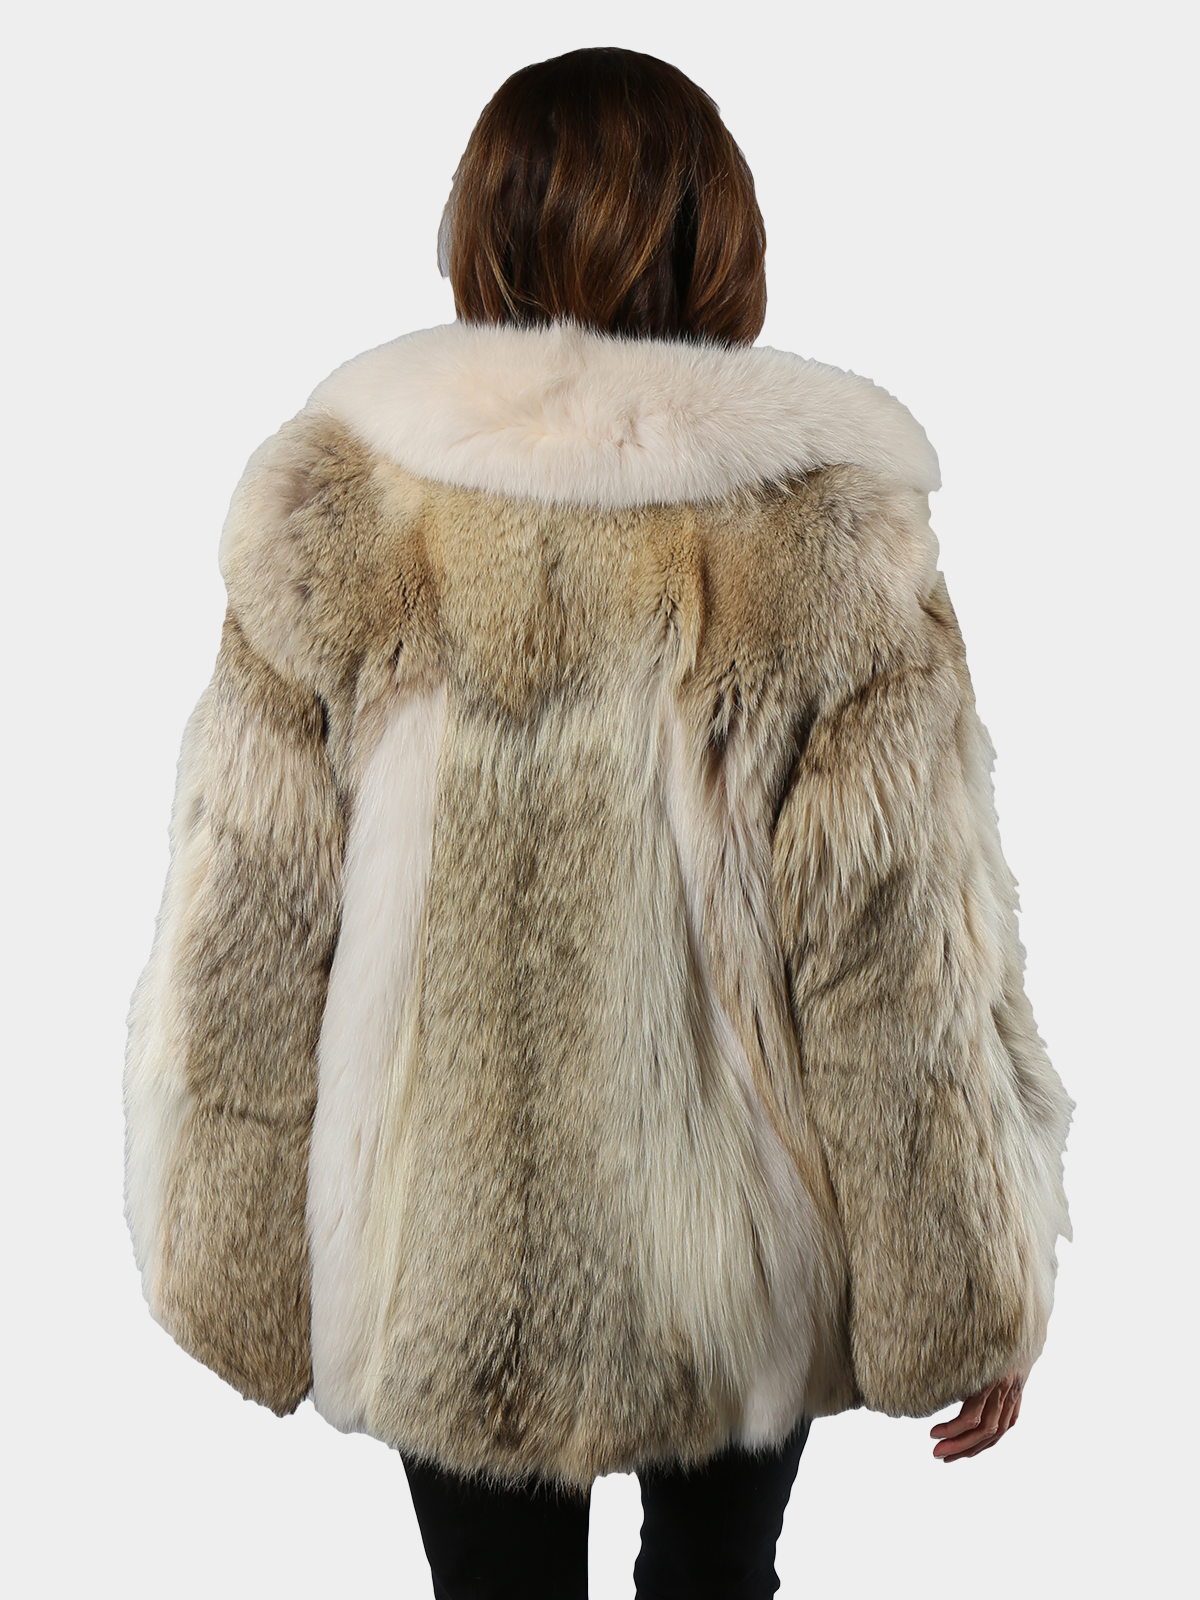 Coyote Fur Jacket with Shadow Fox Trim (Women's XS) - Estate Furs